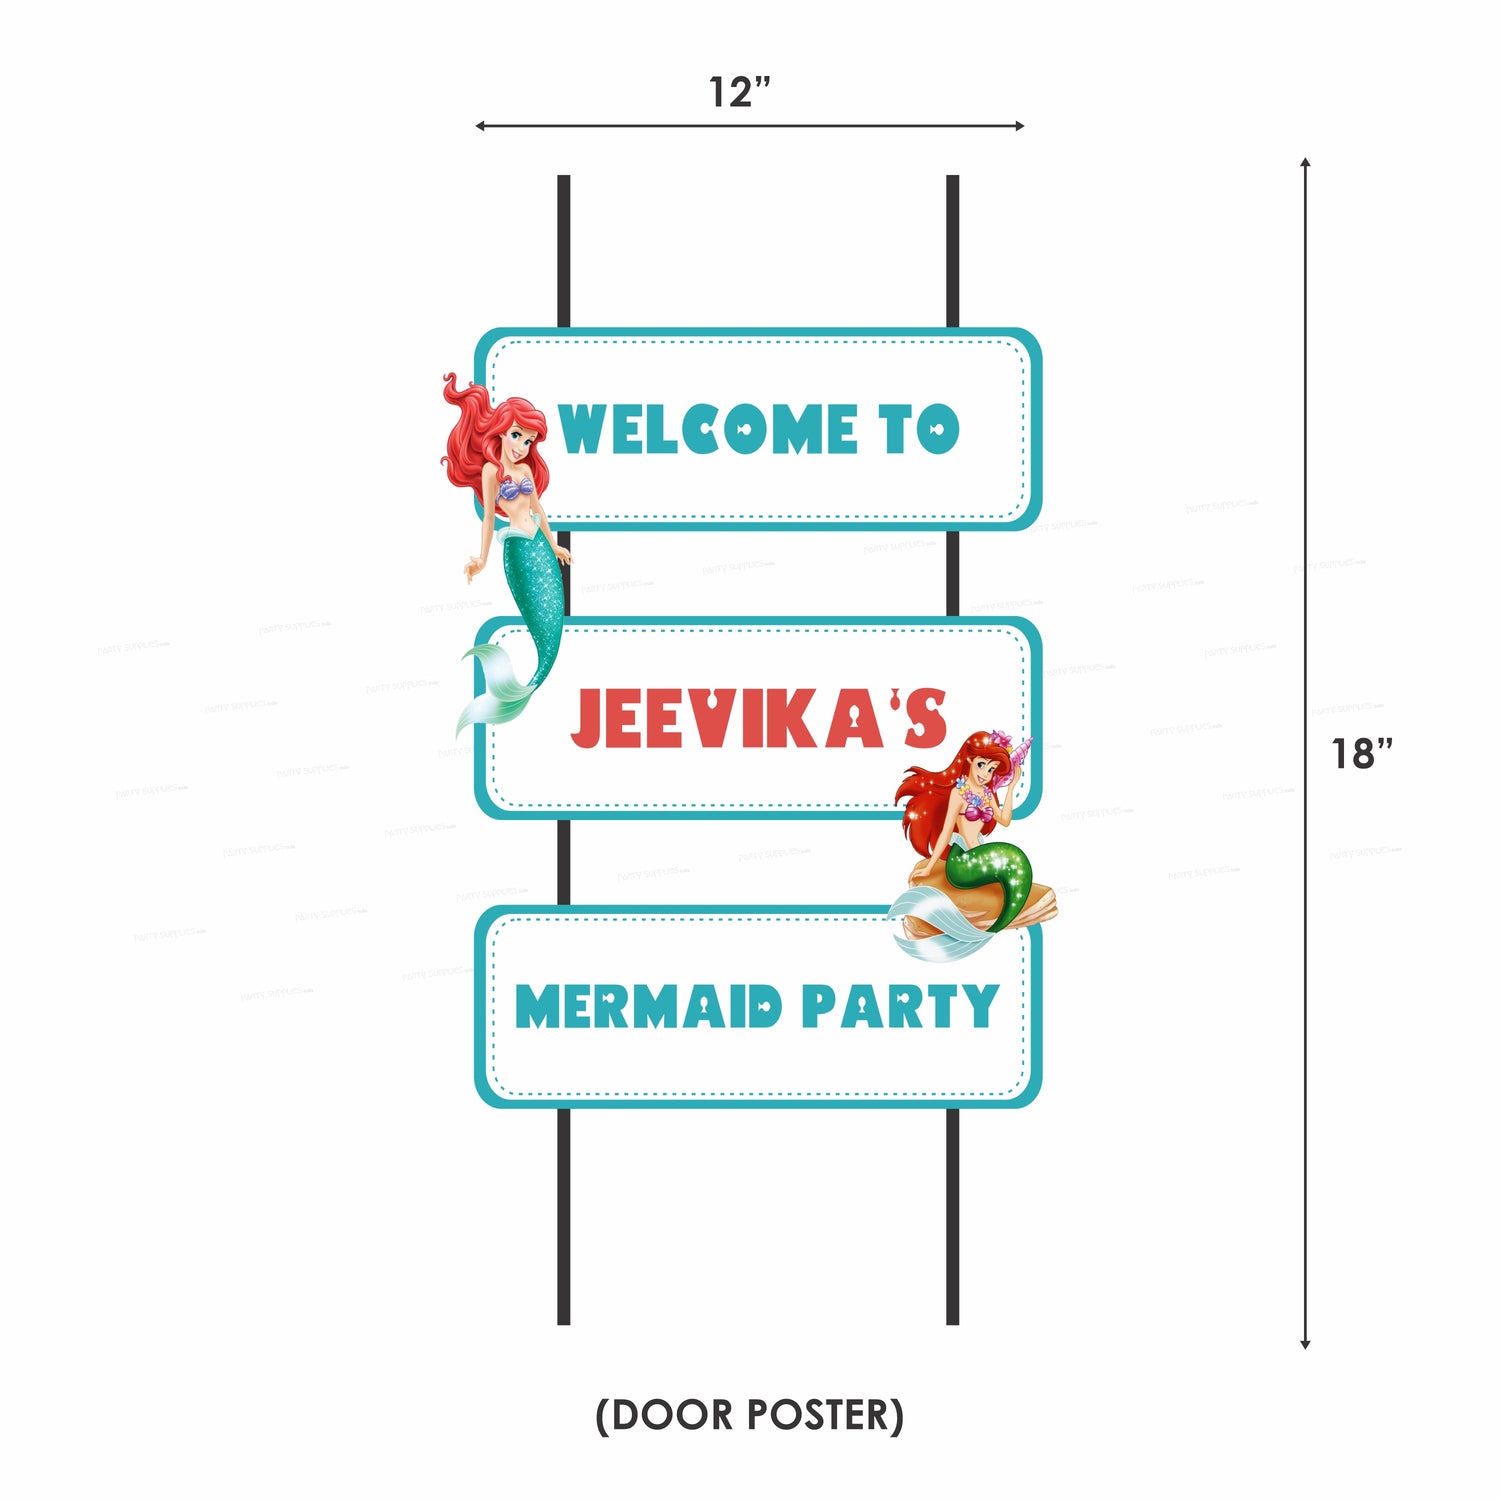 PSI Mermaid Theme Preferred Kit